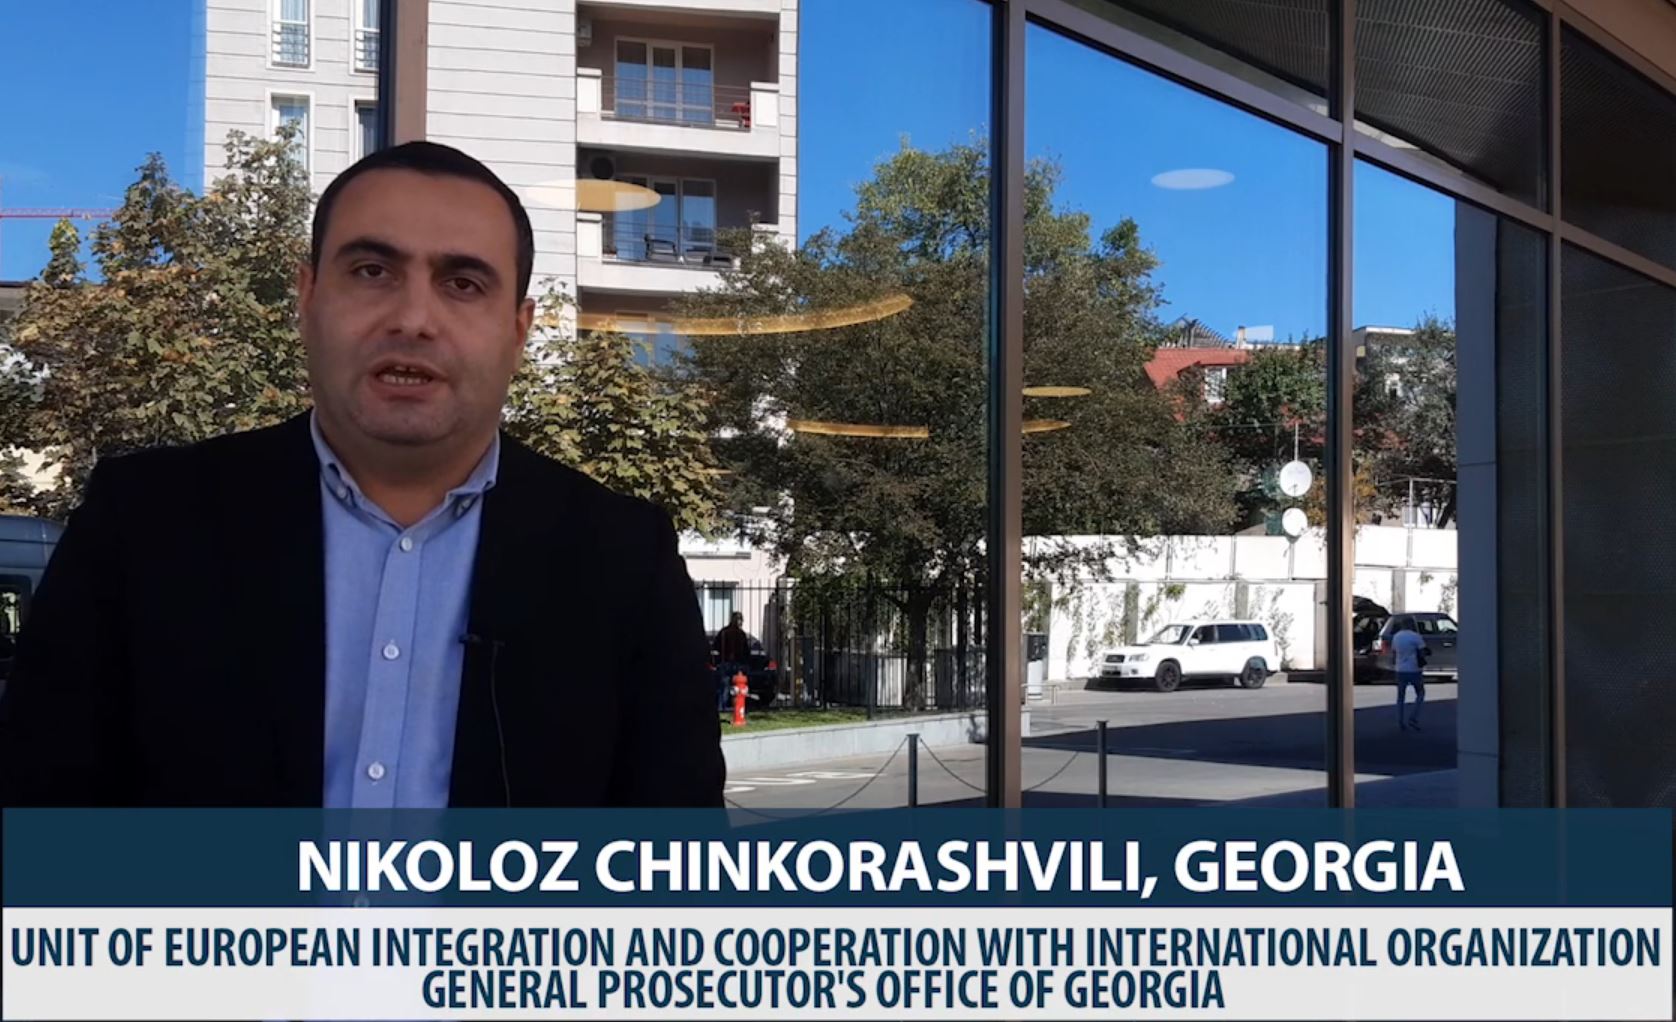 Testimonial of Nikoloz Chinkorashvili from Local Steering Commitee meeting in Georgia